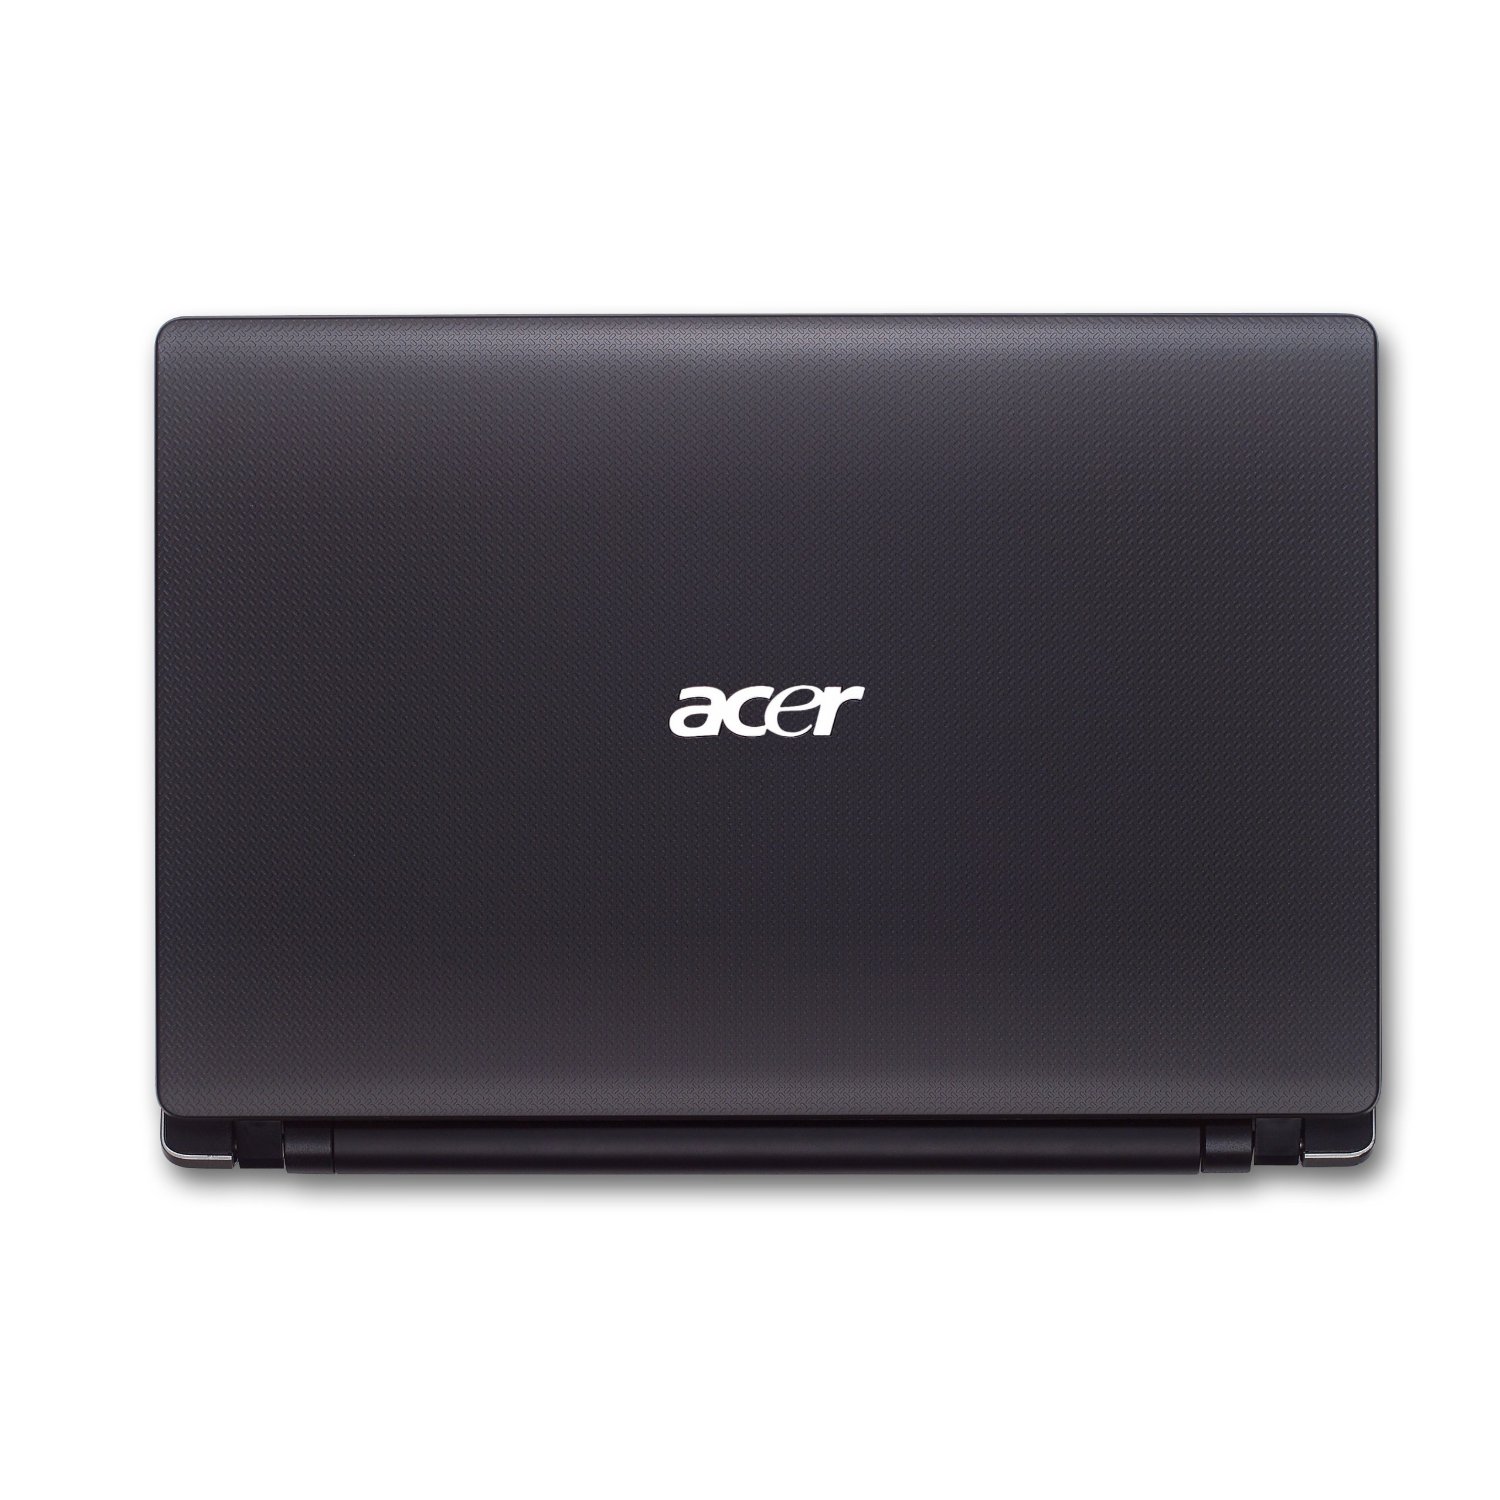 Acer Aspire 1830T-6651